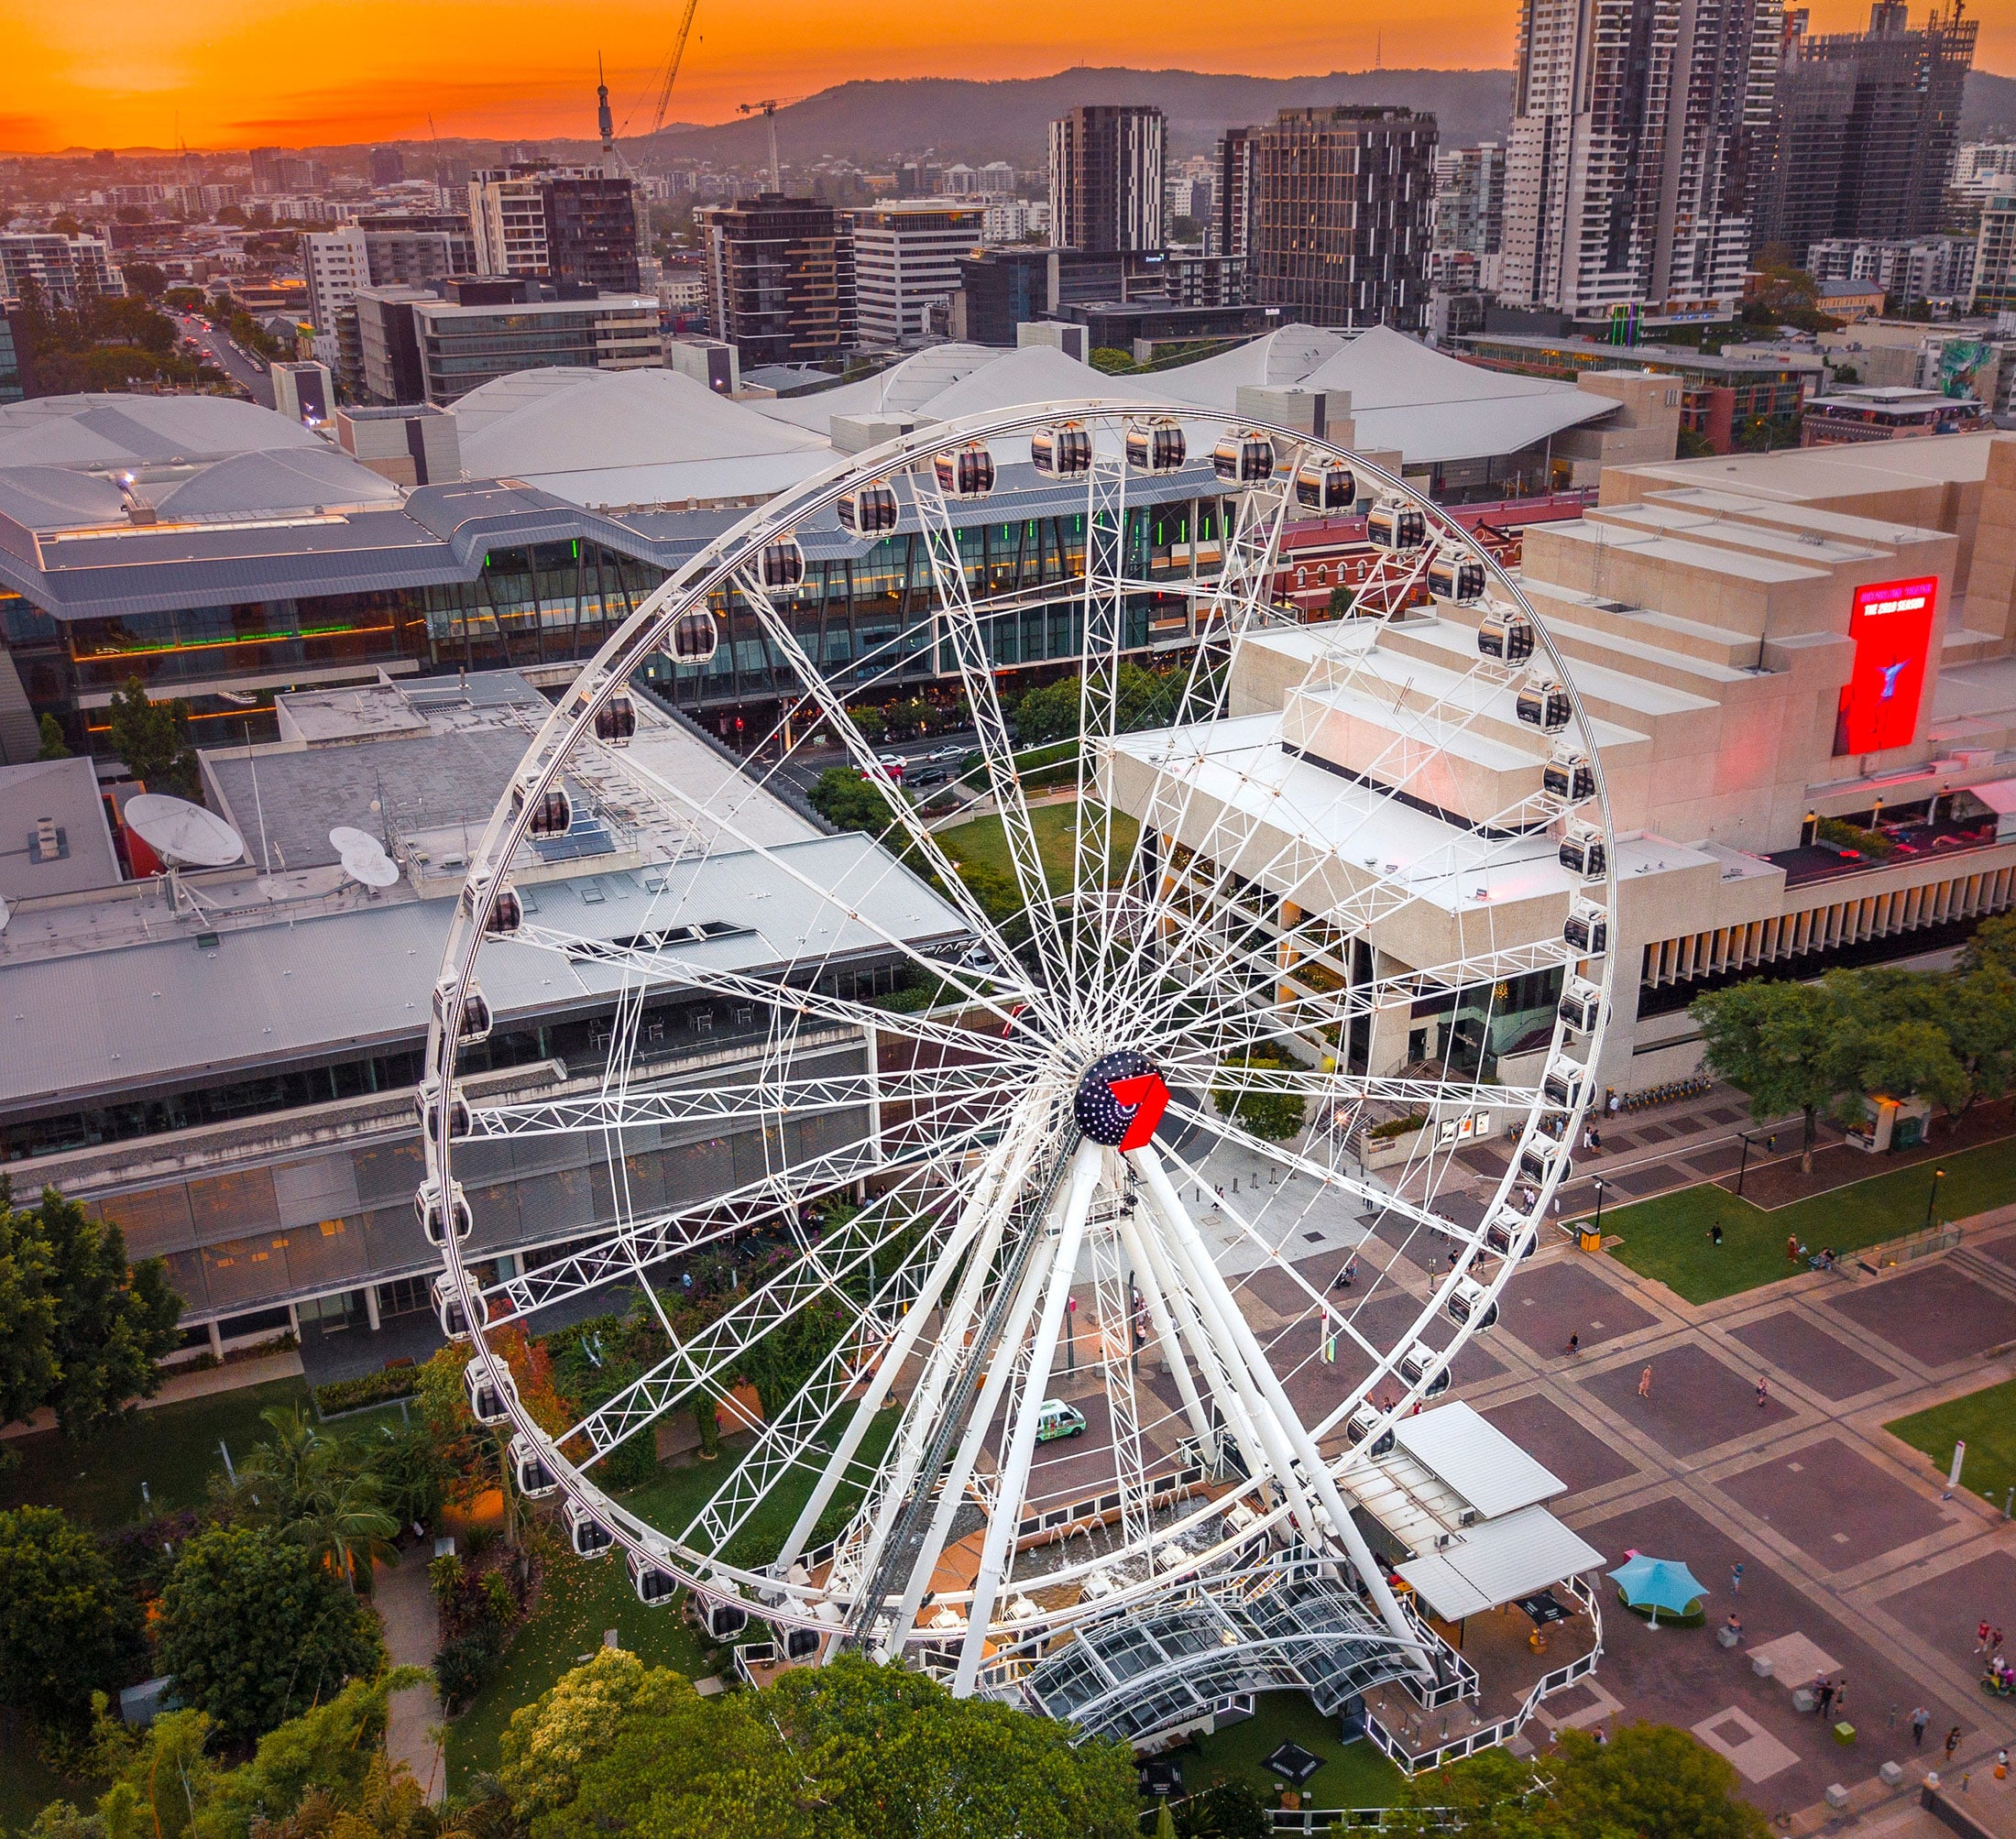 The Wheel of Brisbane  Iconic Ferris Wheel Breathtaking Views